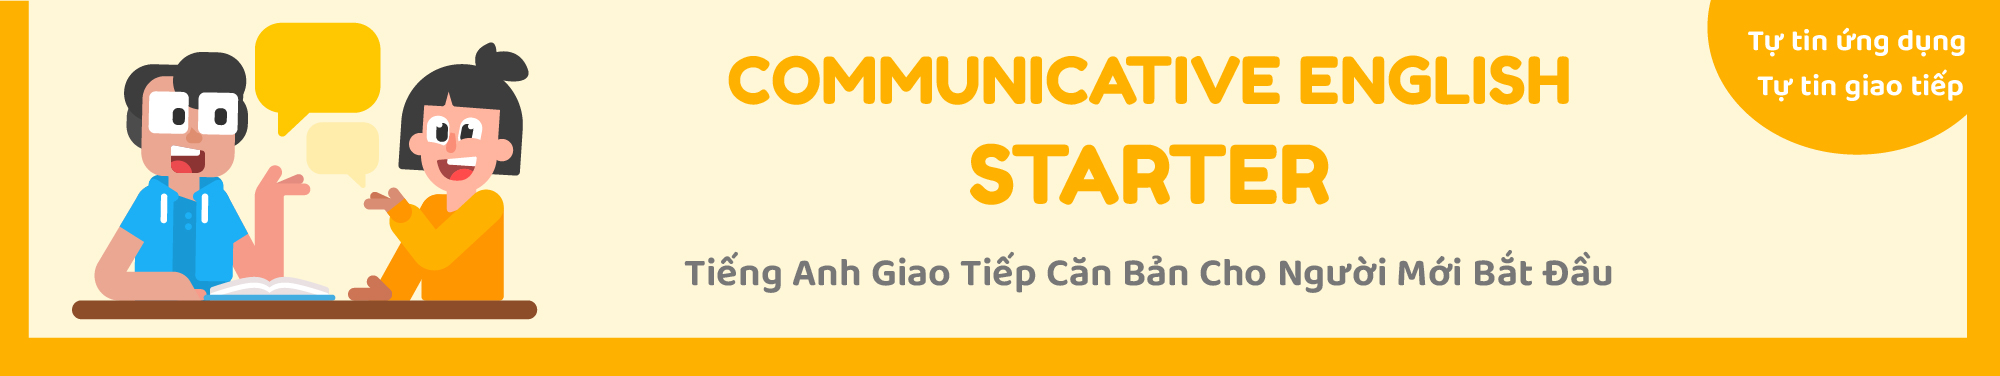 VOCA Communicative - Starter banner